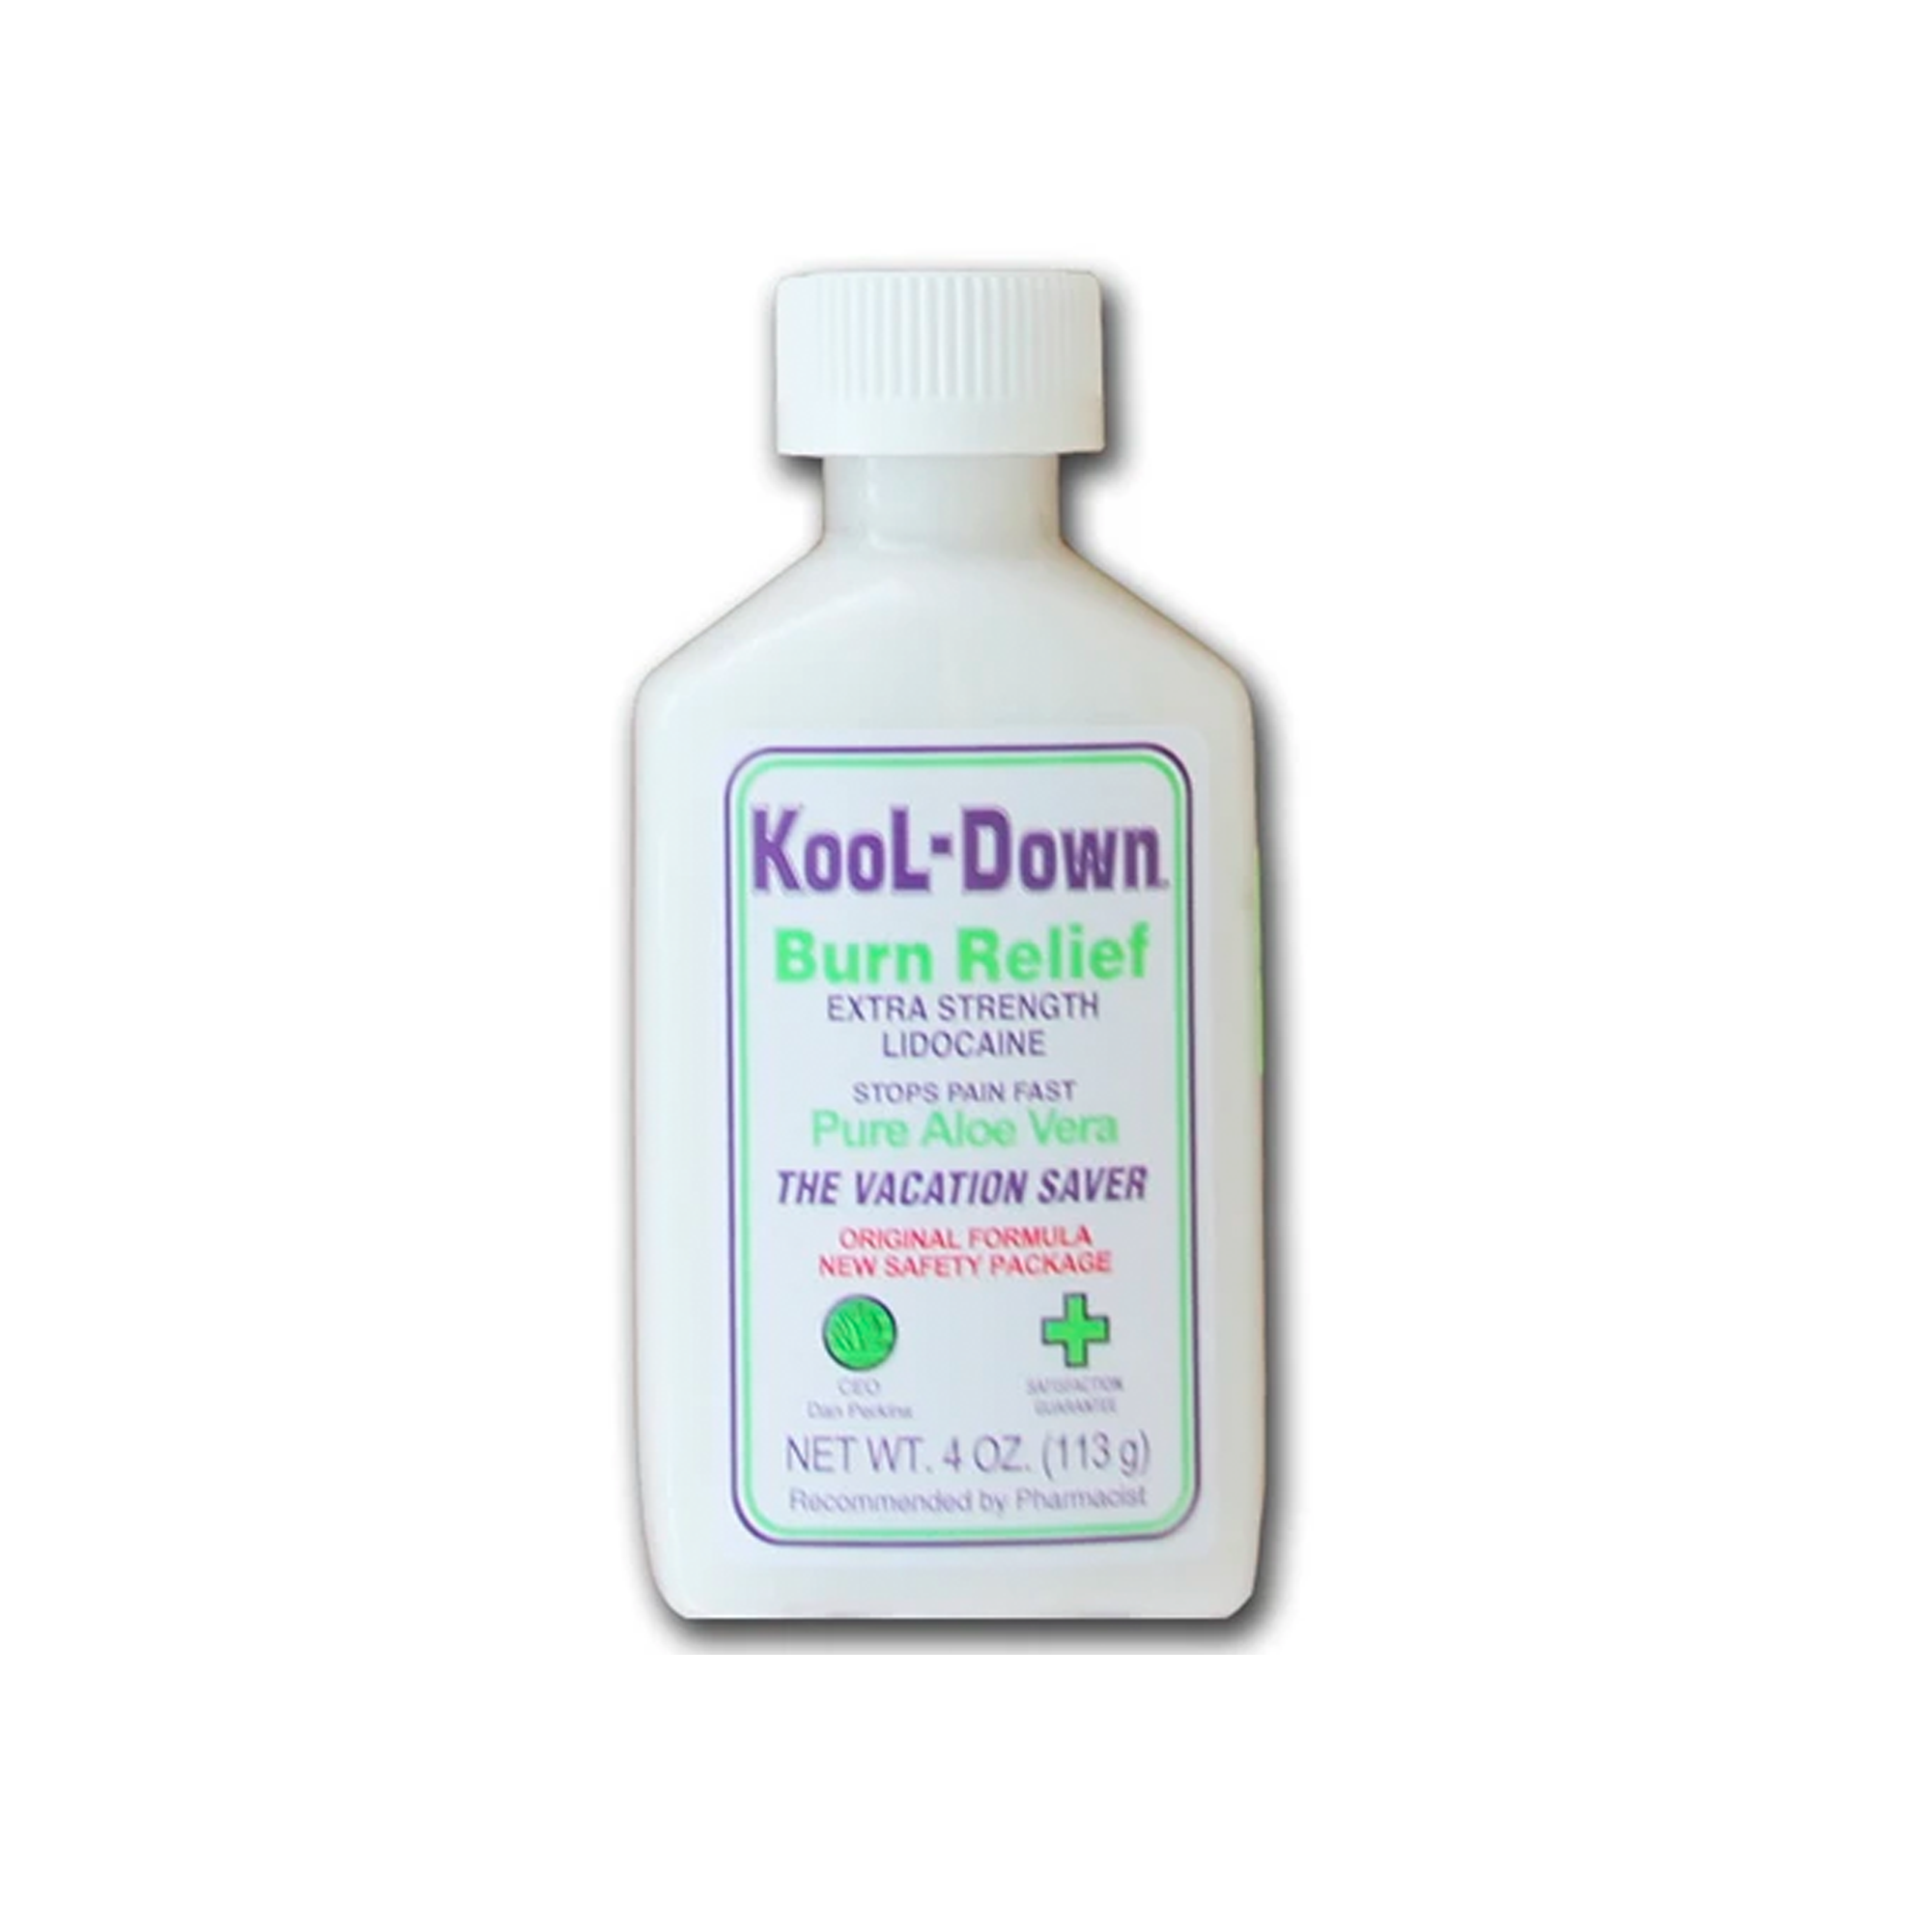 Kool-Down Extra Strength Lidocaine Burn Relief